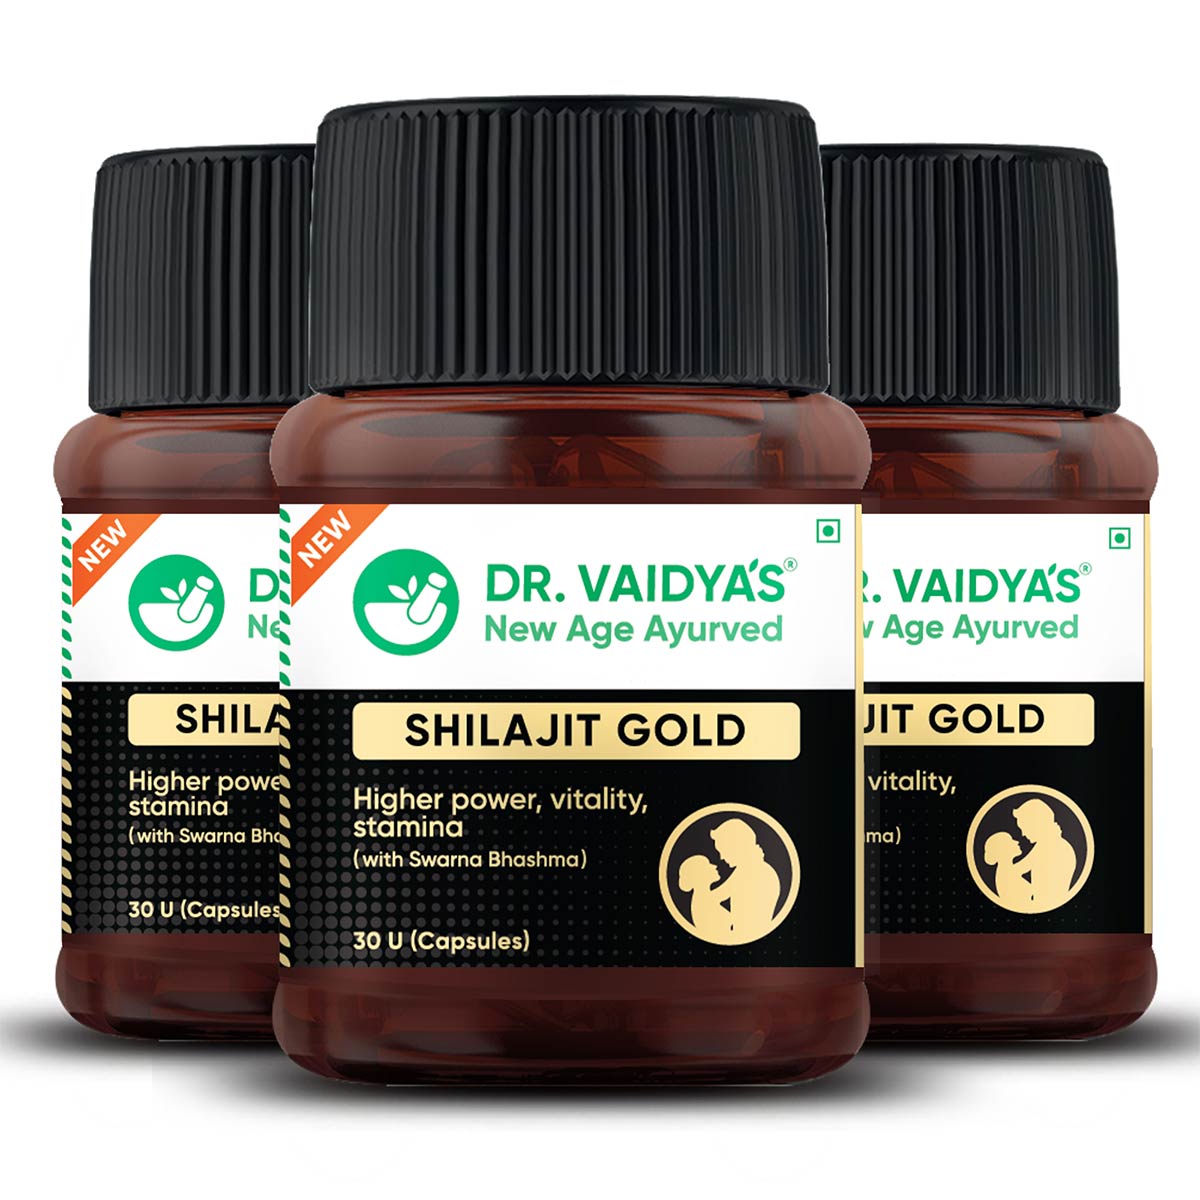 Shilajit Gold - For more Stamina & better Performance